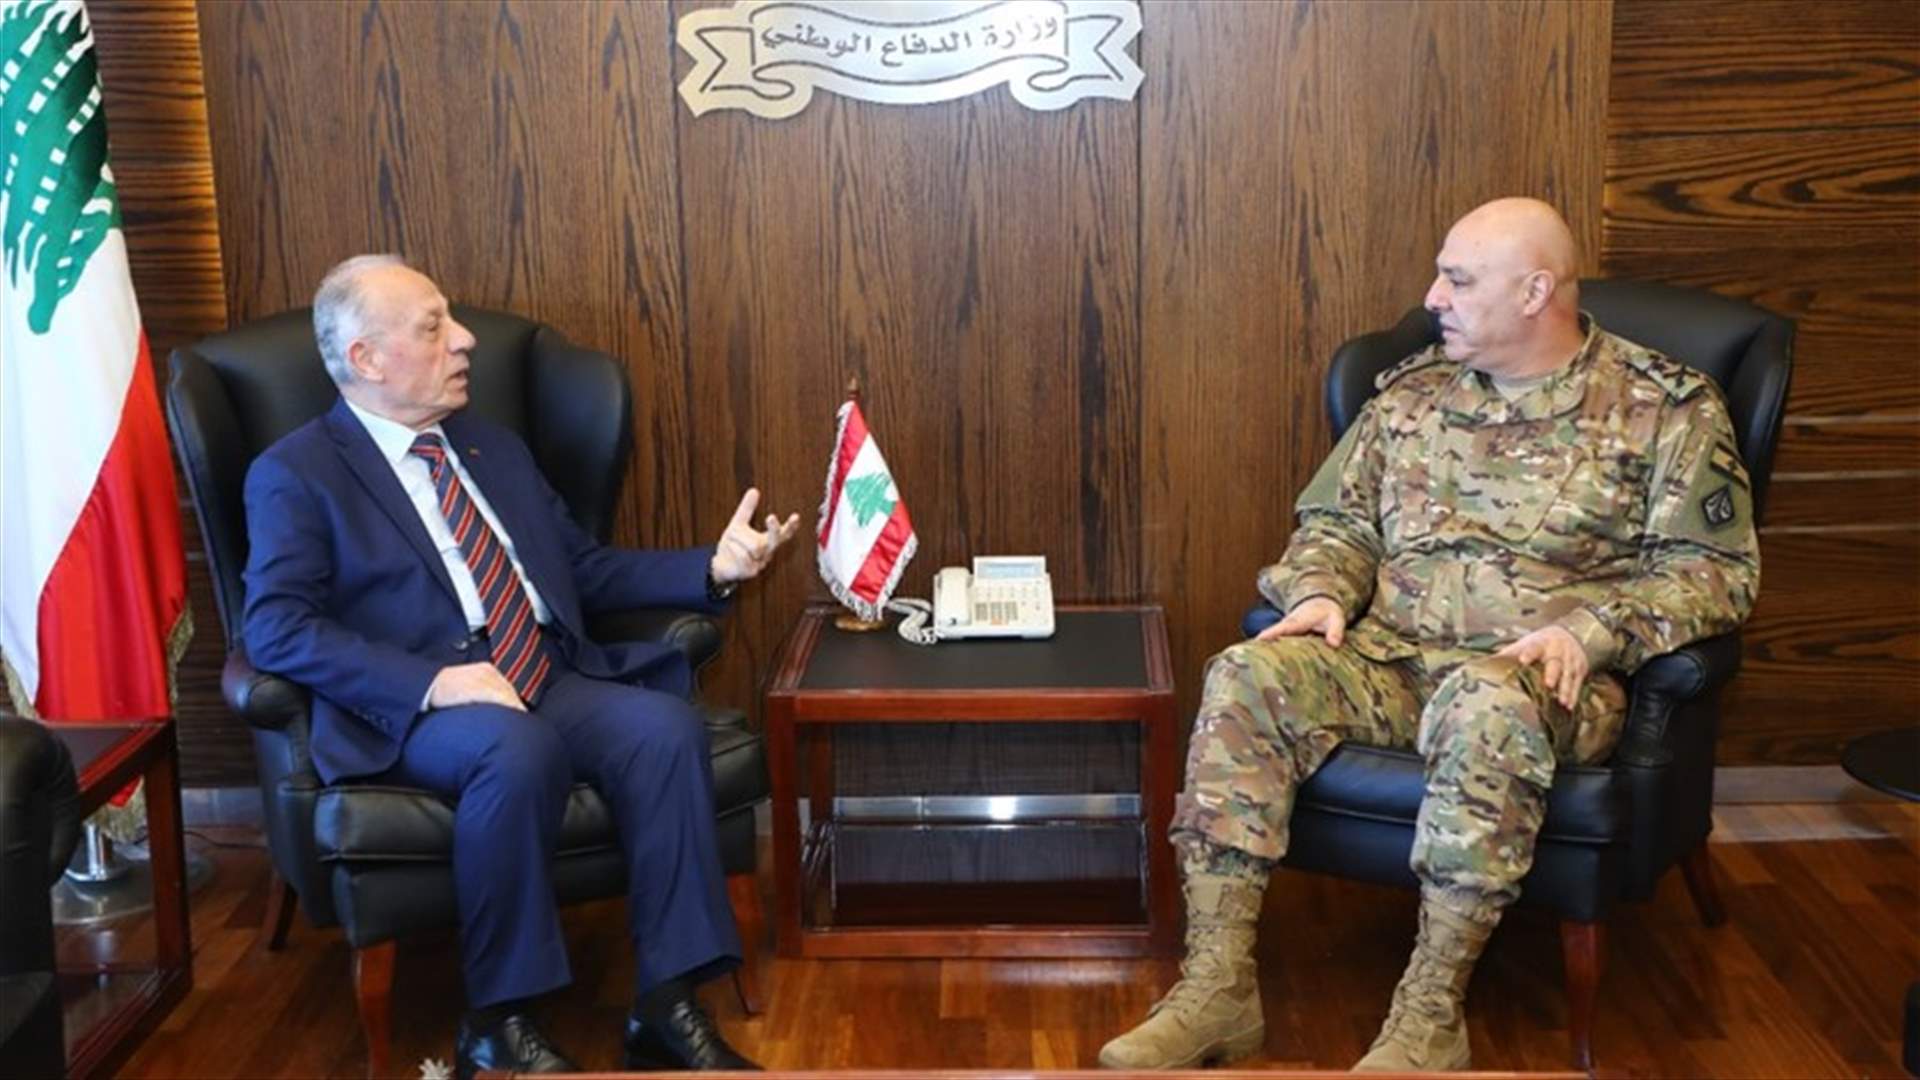 Caretaker Minister of Defense meets LAF chief